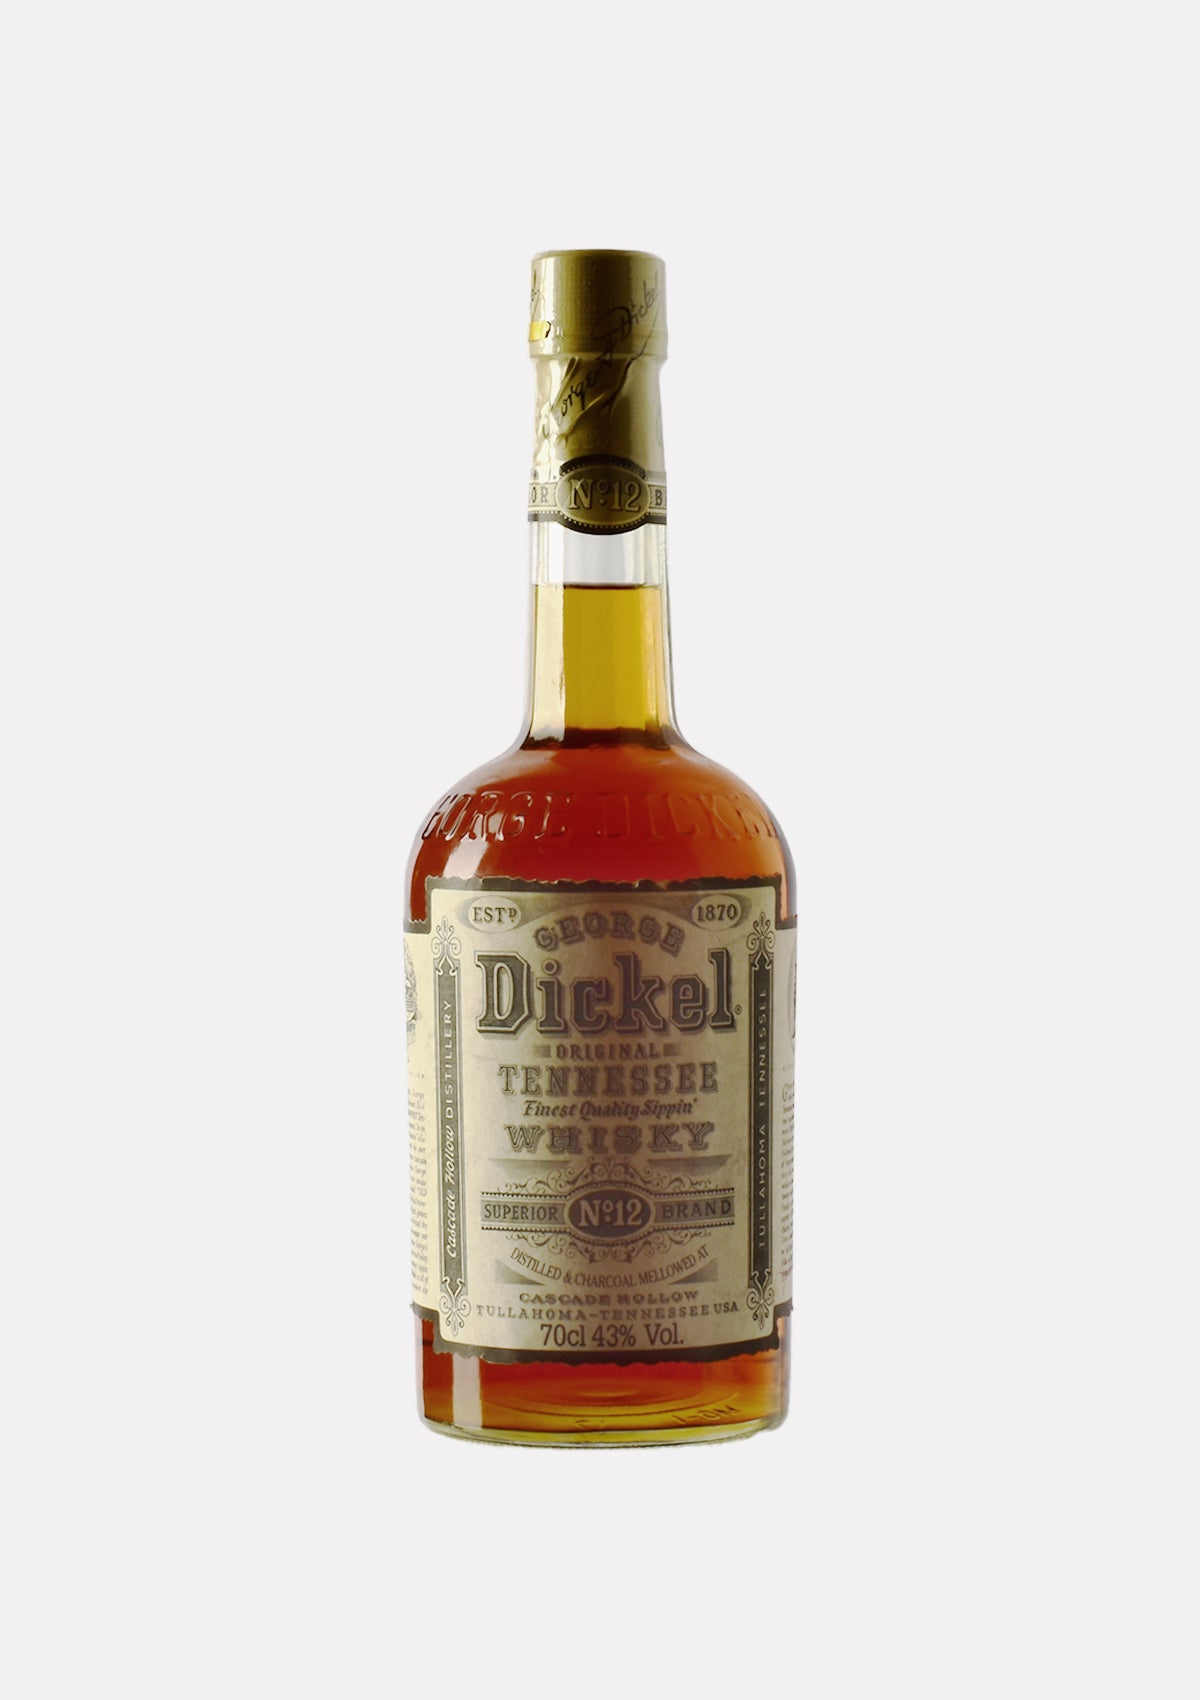 George Dickel Superior No. 12 Brand